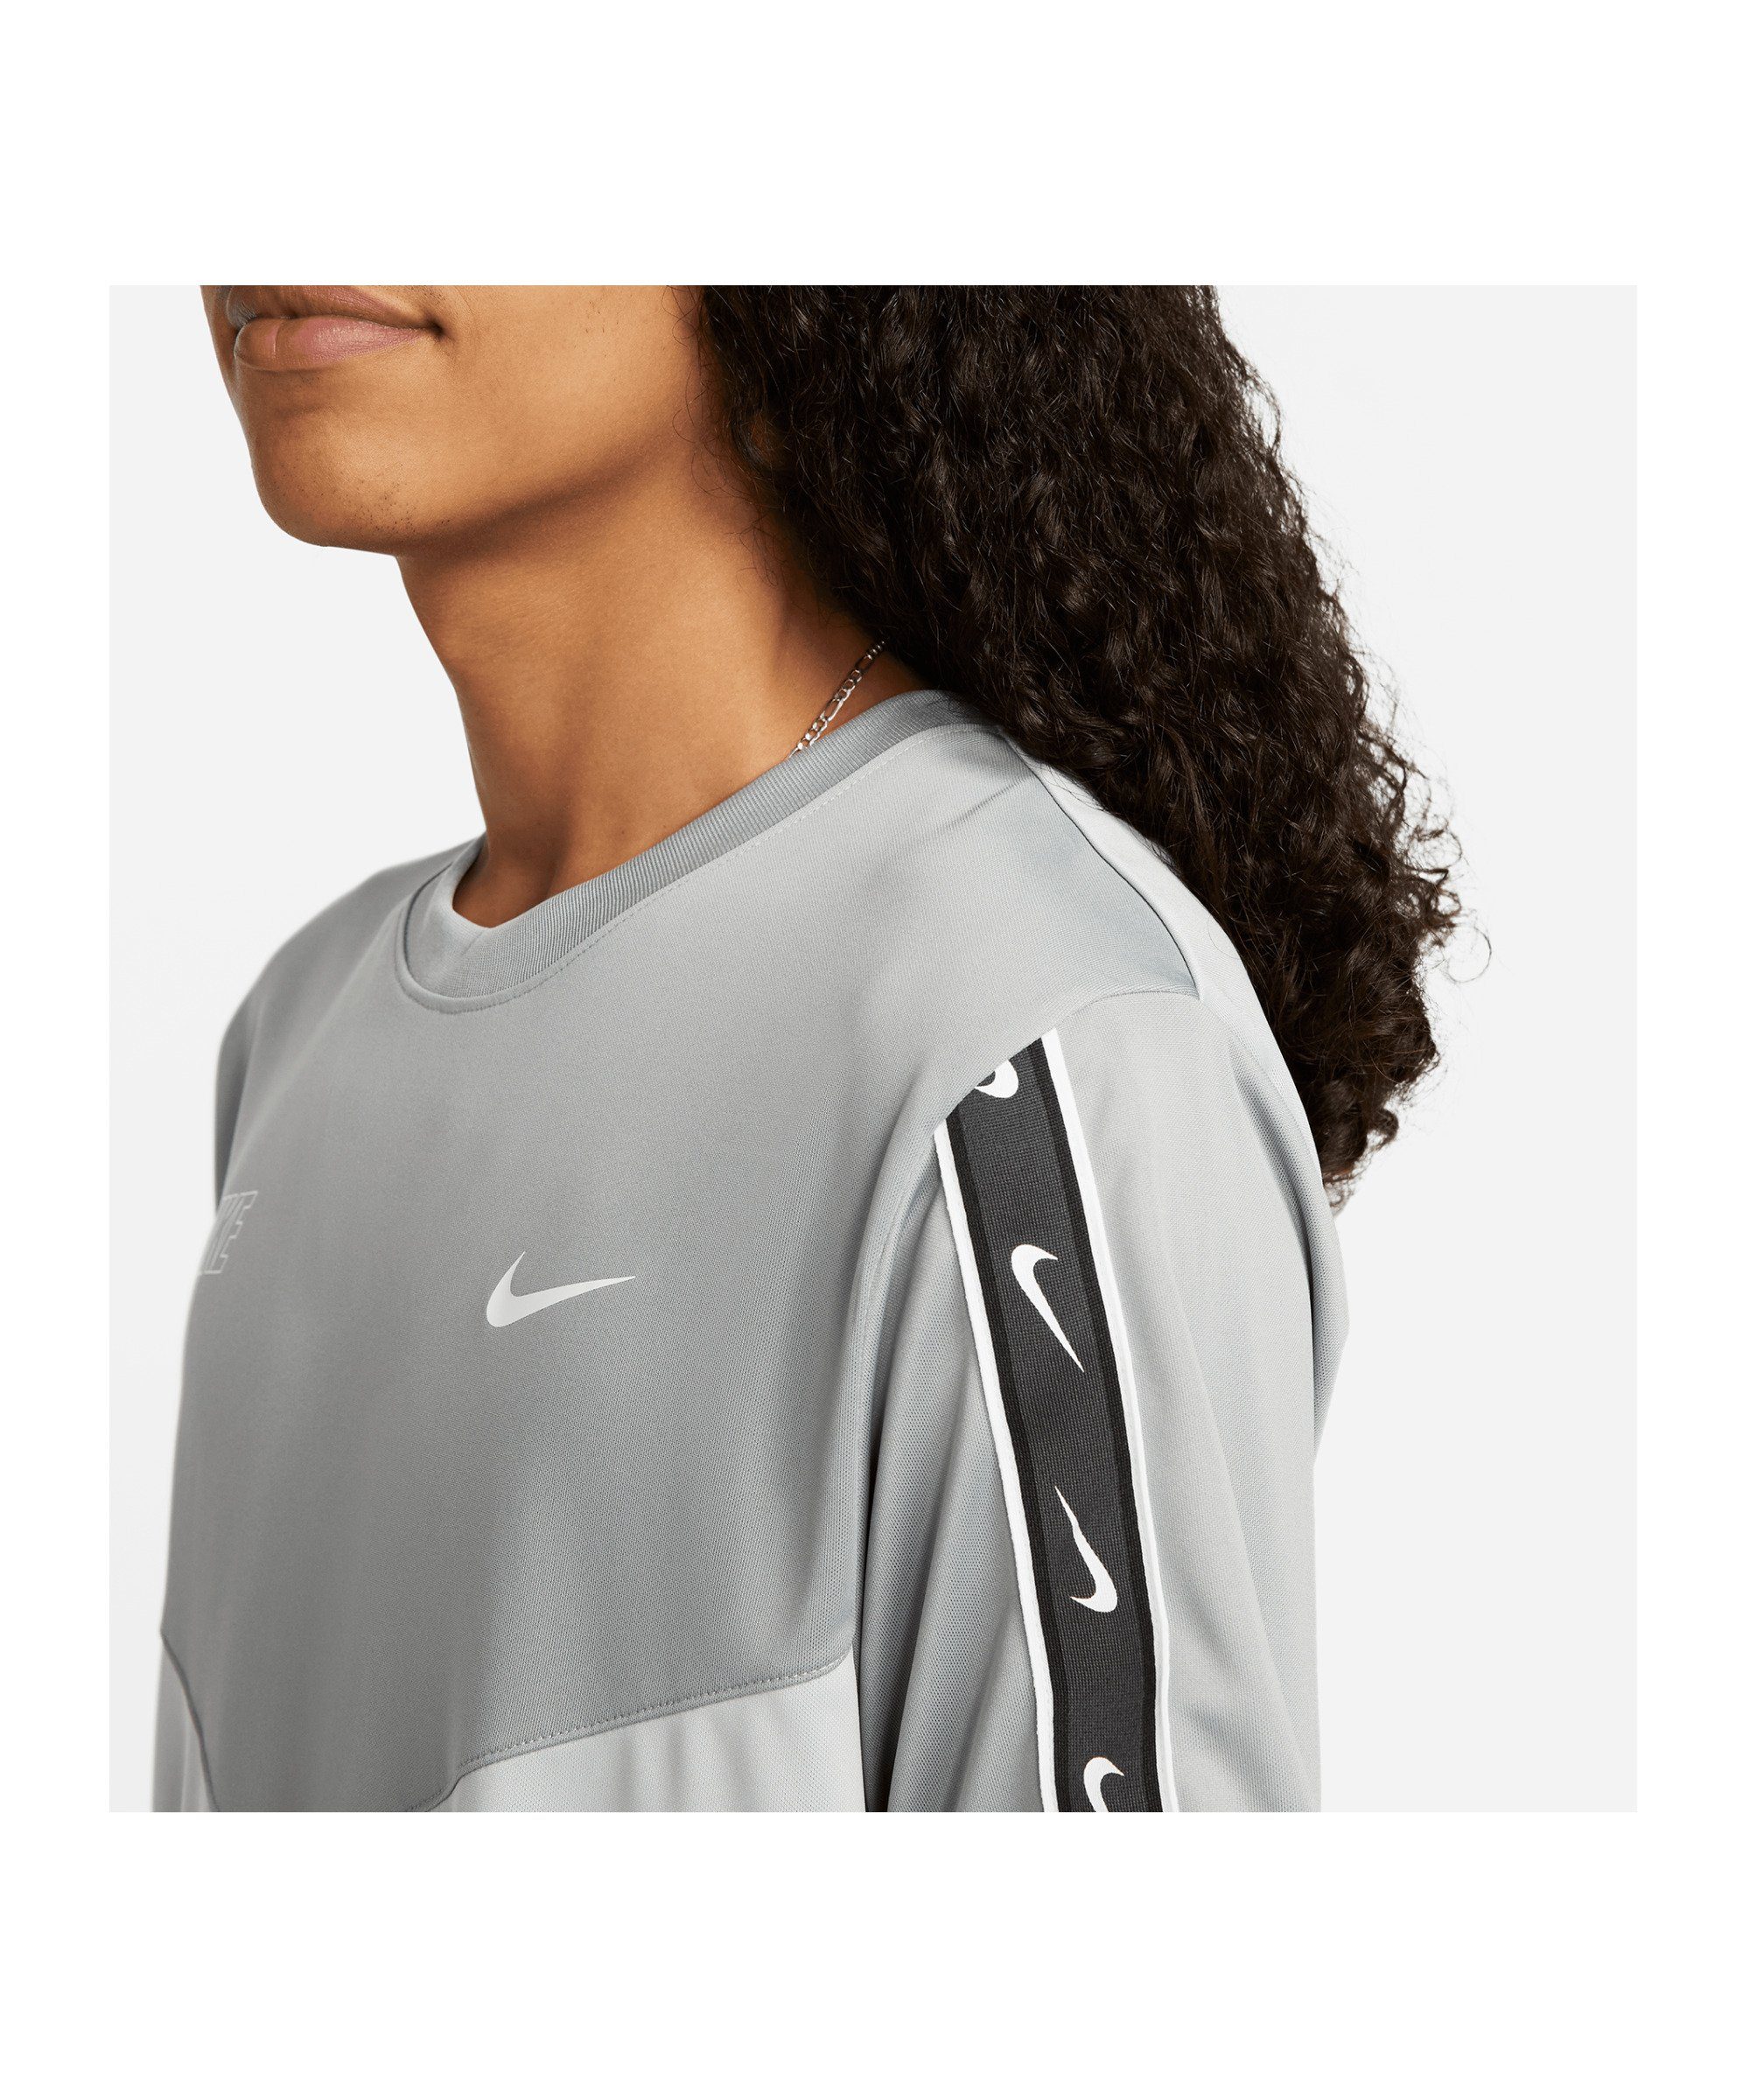 T-Shirt Sportswear Nike default T-Shirt Repeat graugrauweiss